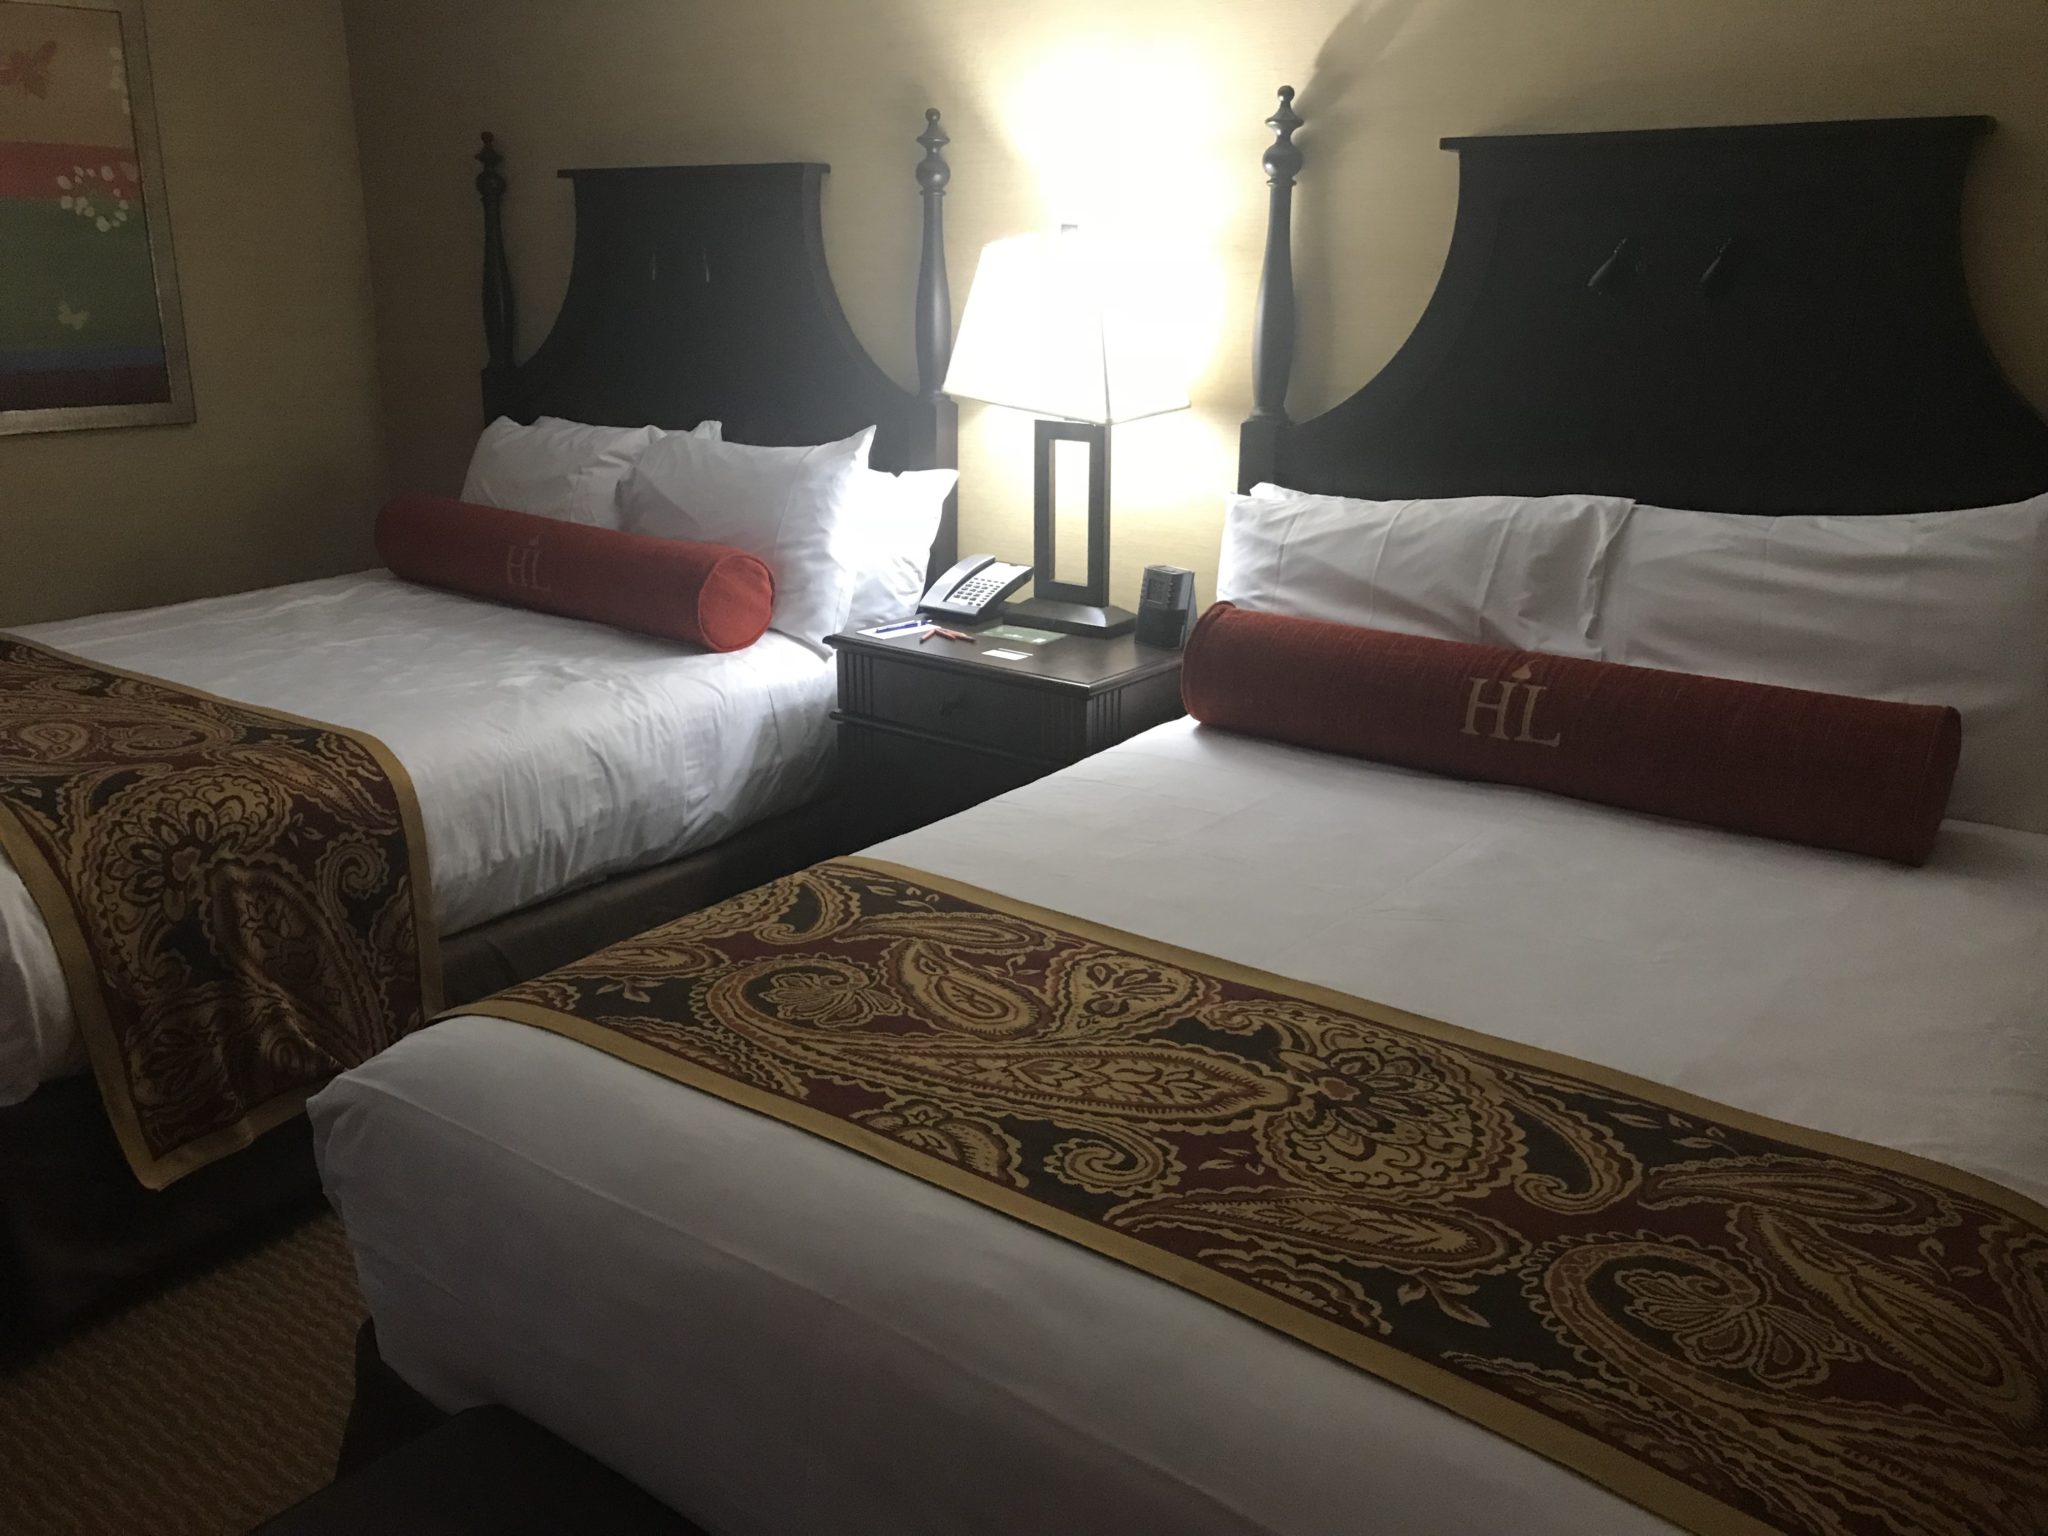 Hershey Lodge accommodations